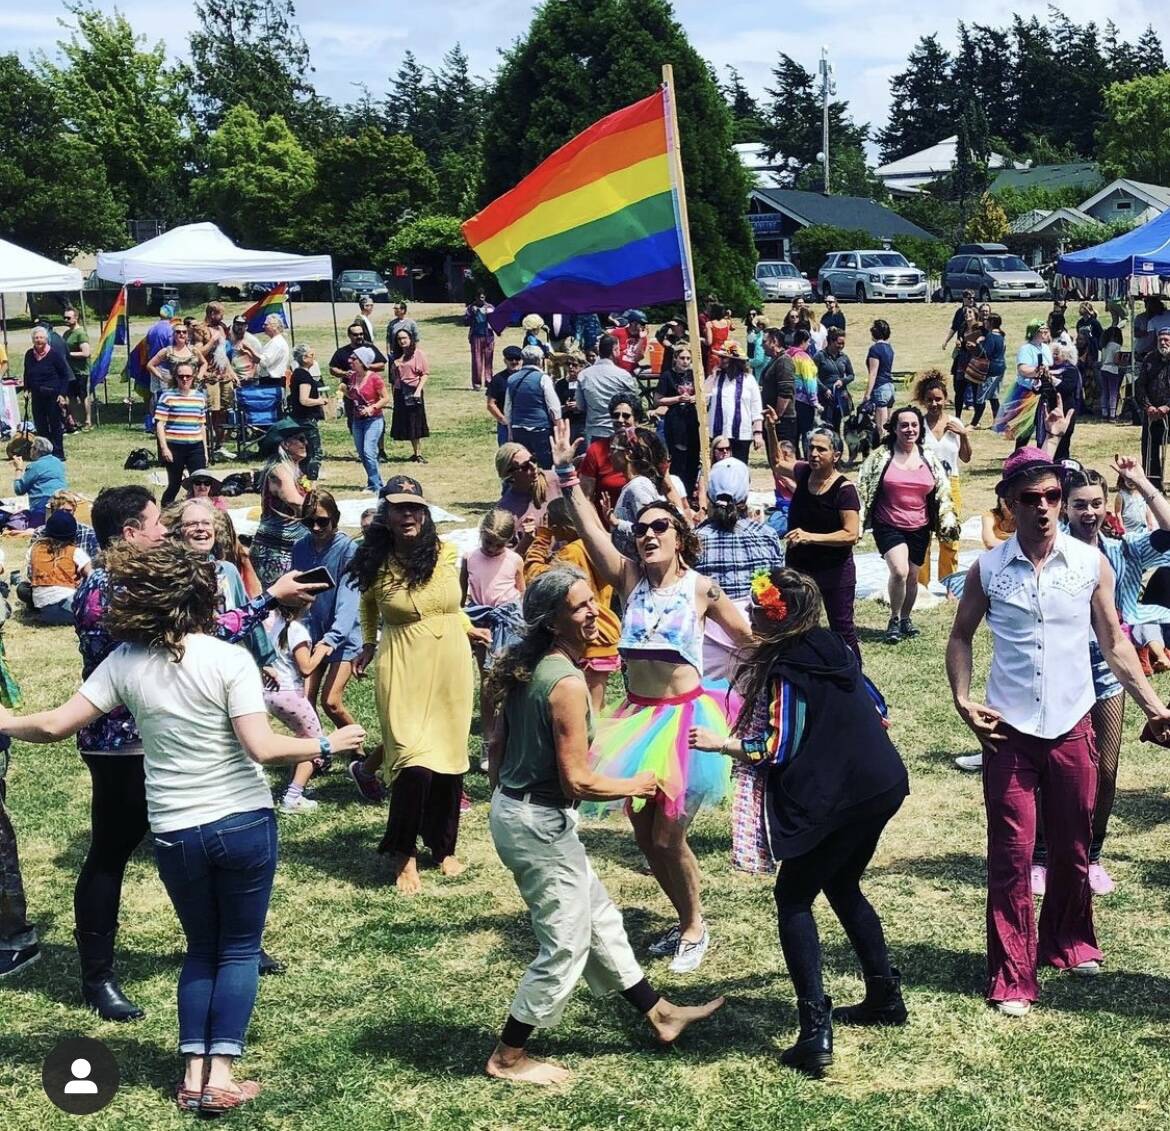 Mandi Johnson photo
The crowd having fun at Pride in the Village Green in 2019.